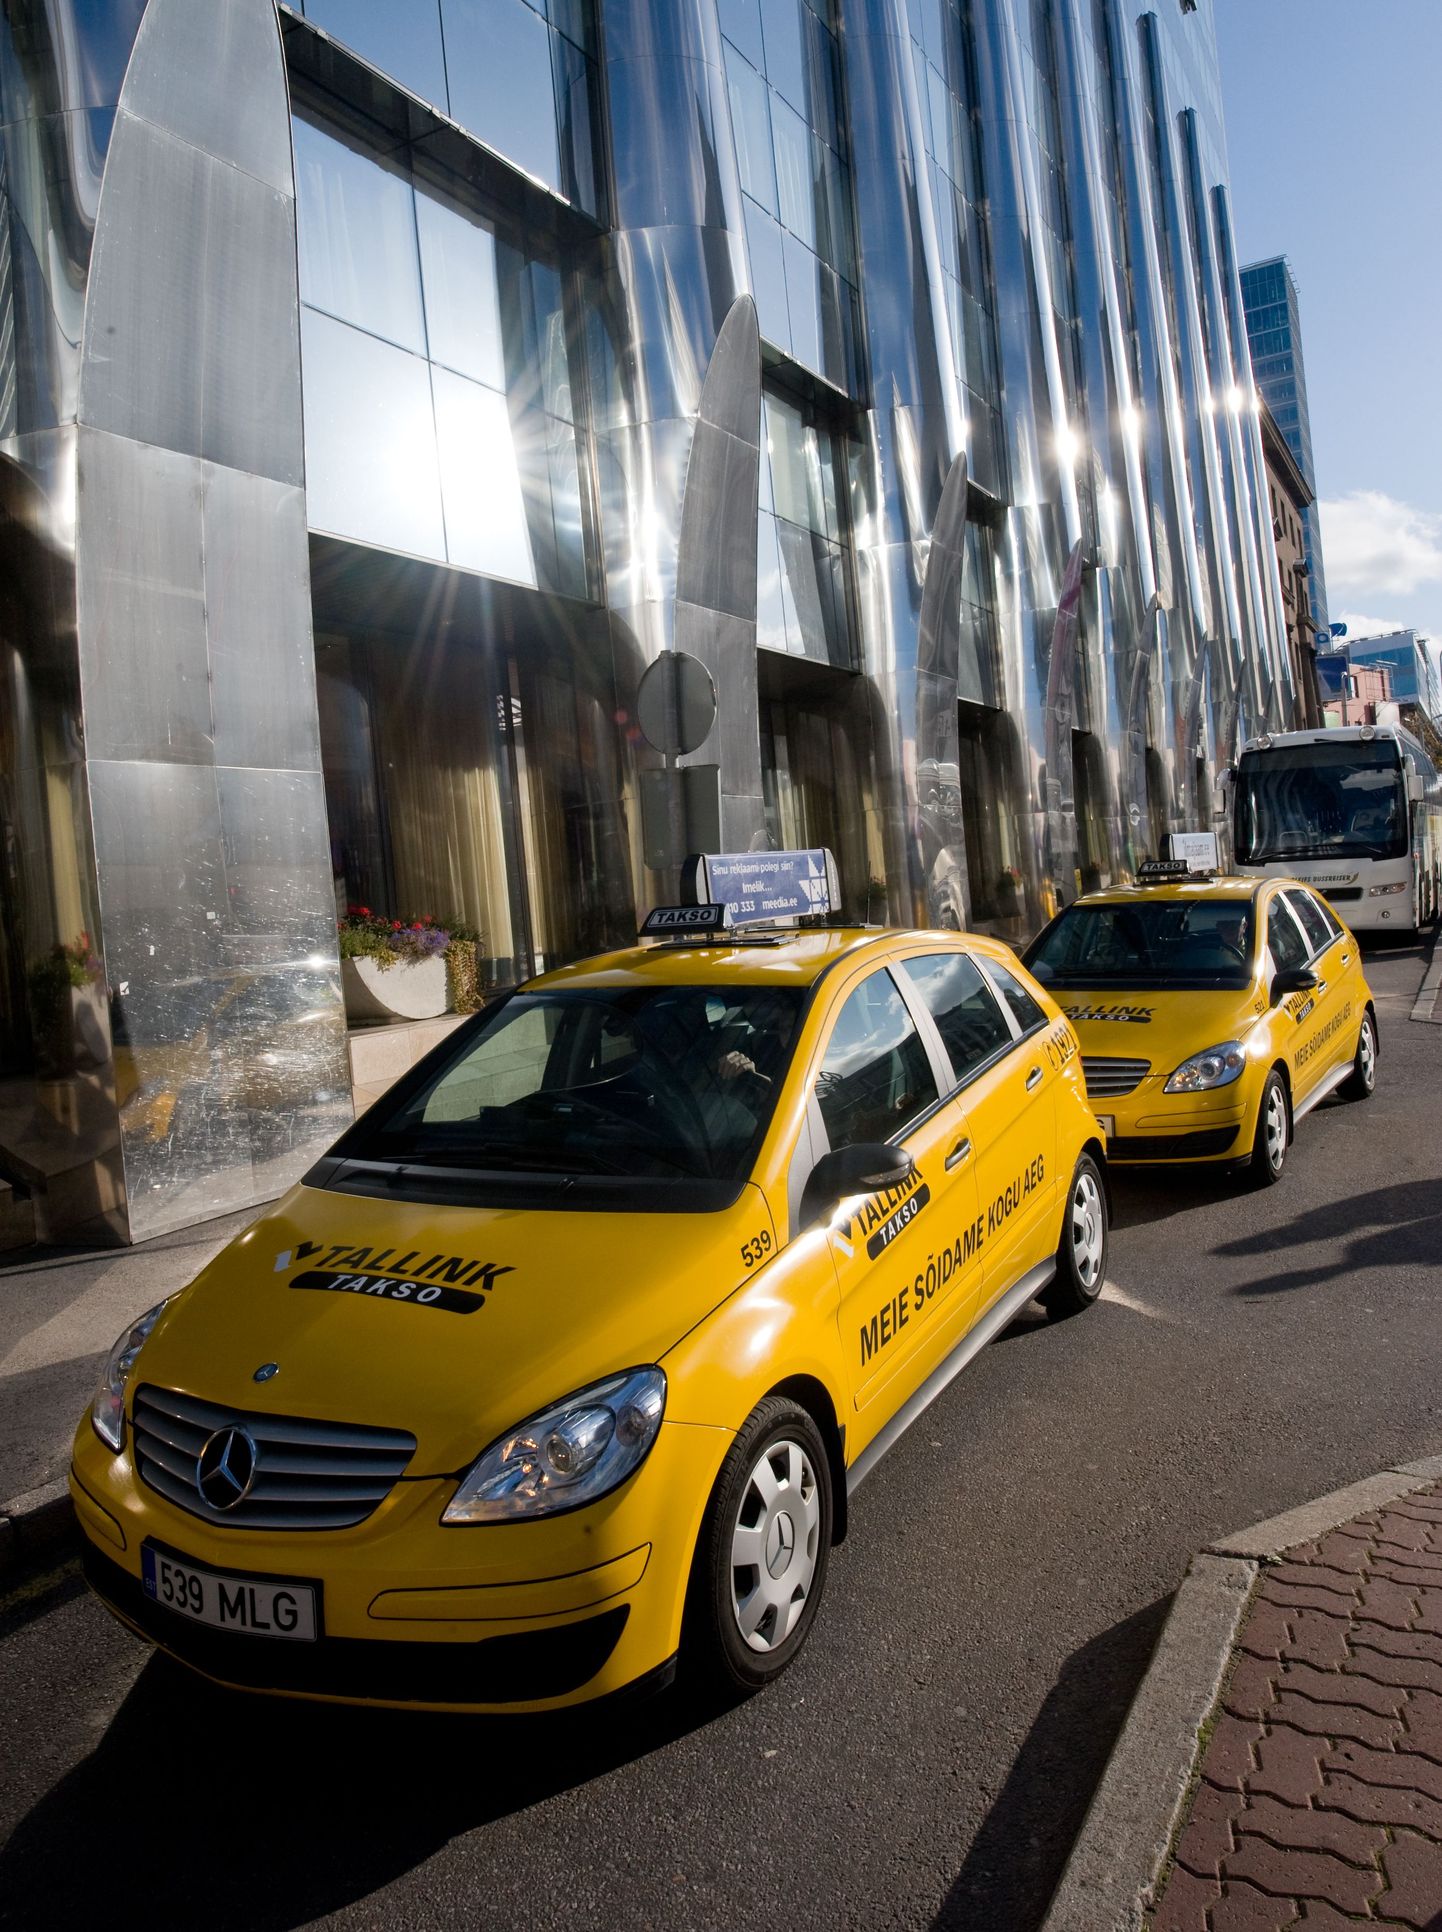 Taksod Tallinki hotelli ees.